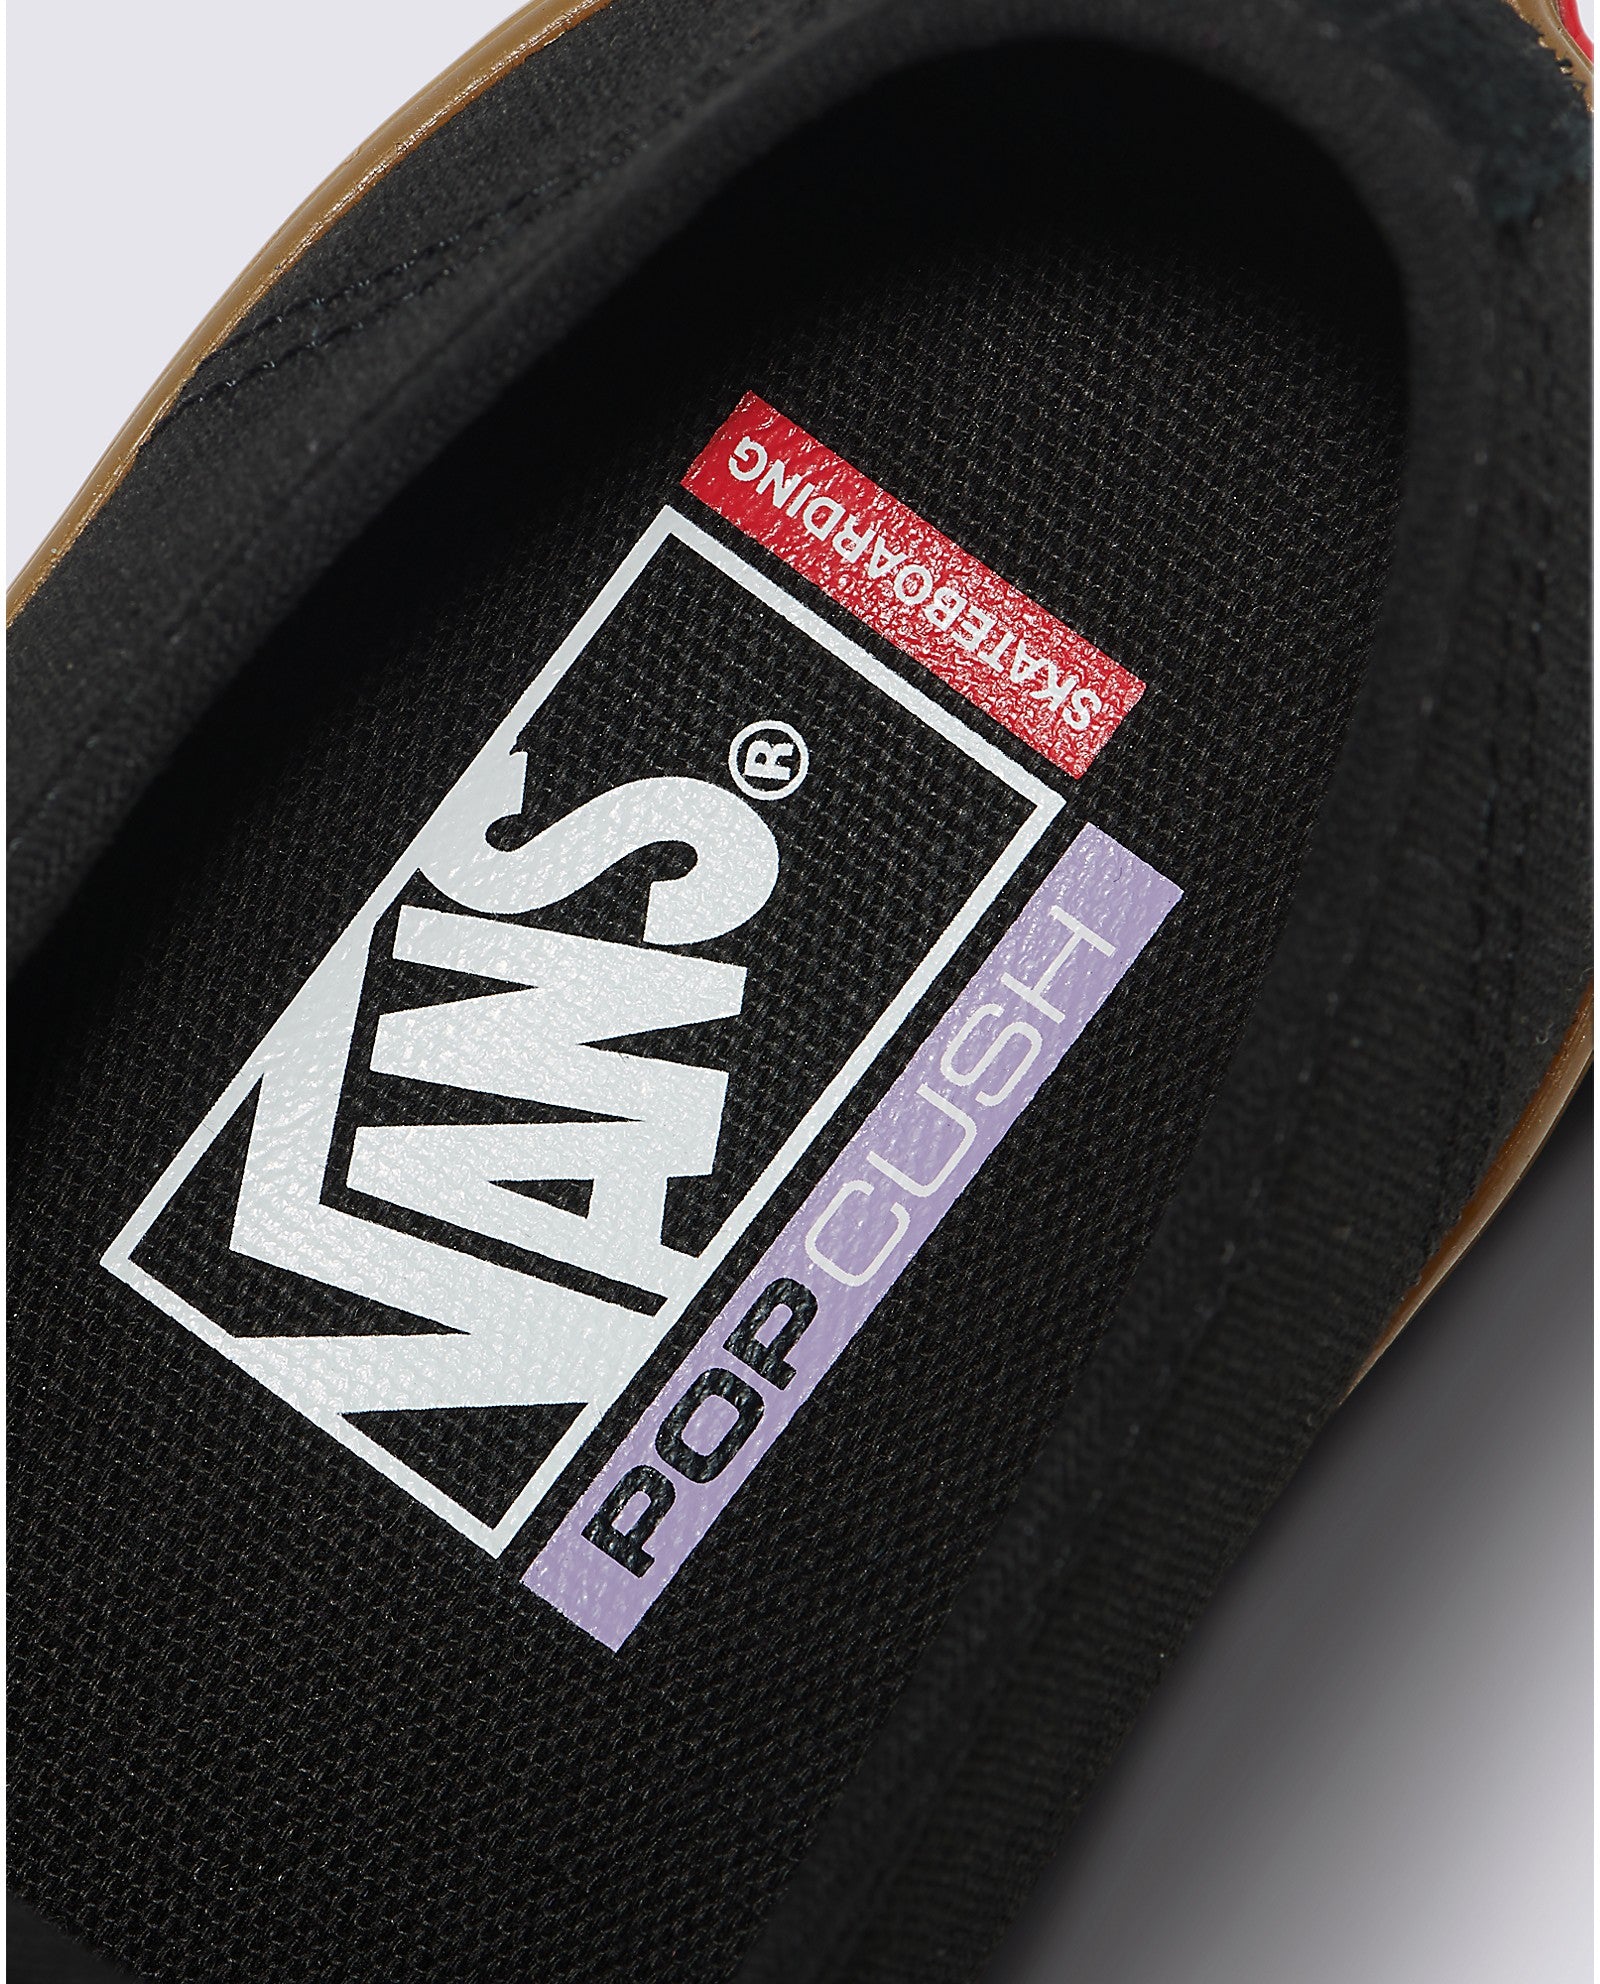 Black/Gum Vans Skate Authentic Skate Shoe Detail